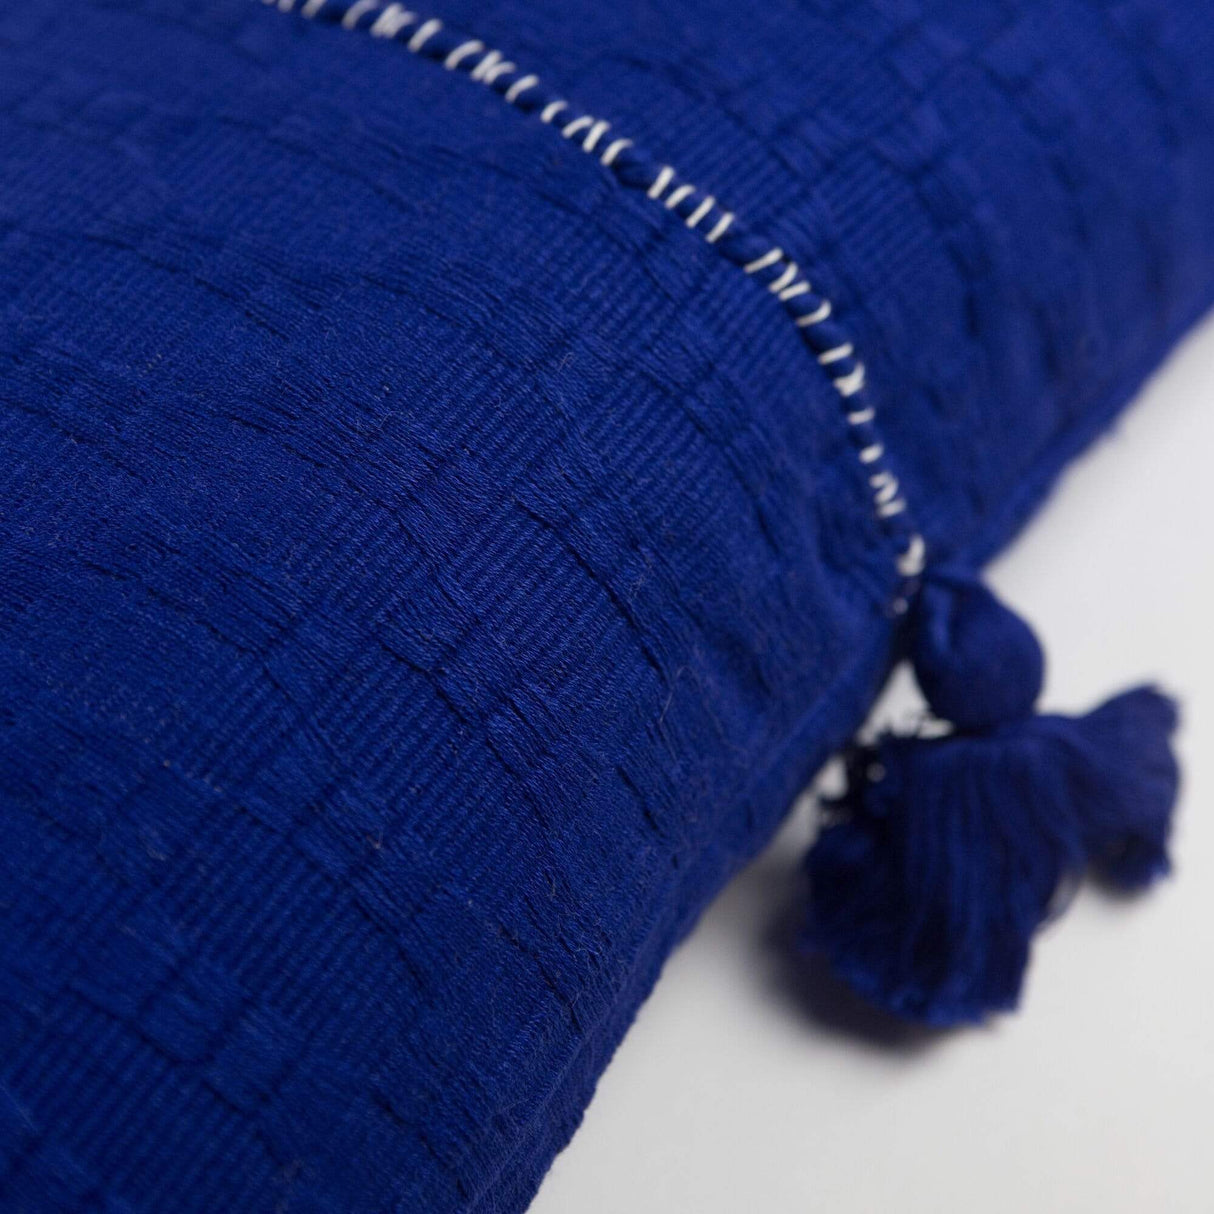 Archive New York Antigua Pillow - Royal Blue Solid Pillow & Decor archive-R1220011-royal-blue-solid